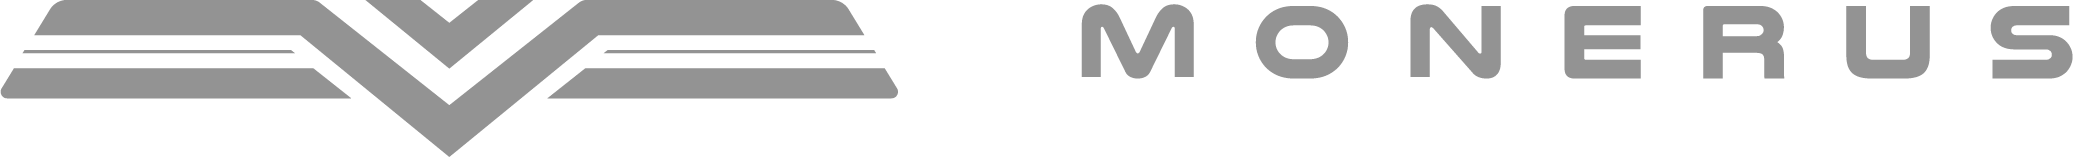 Monerus logo